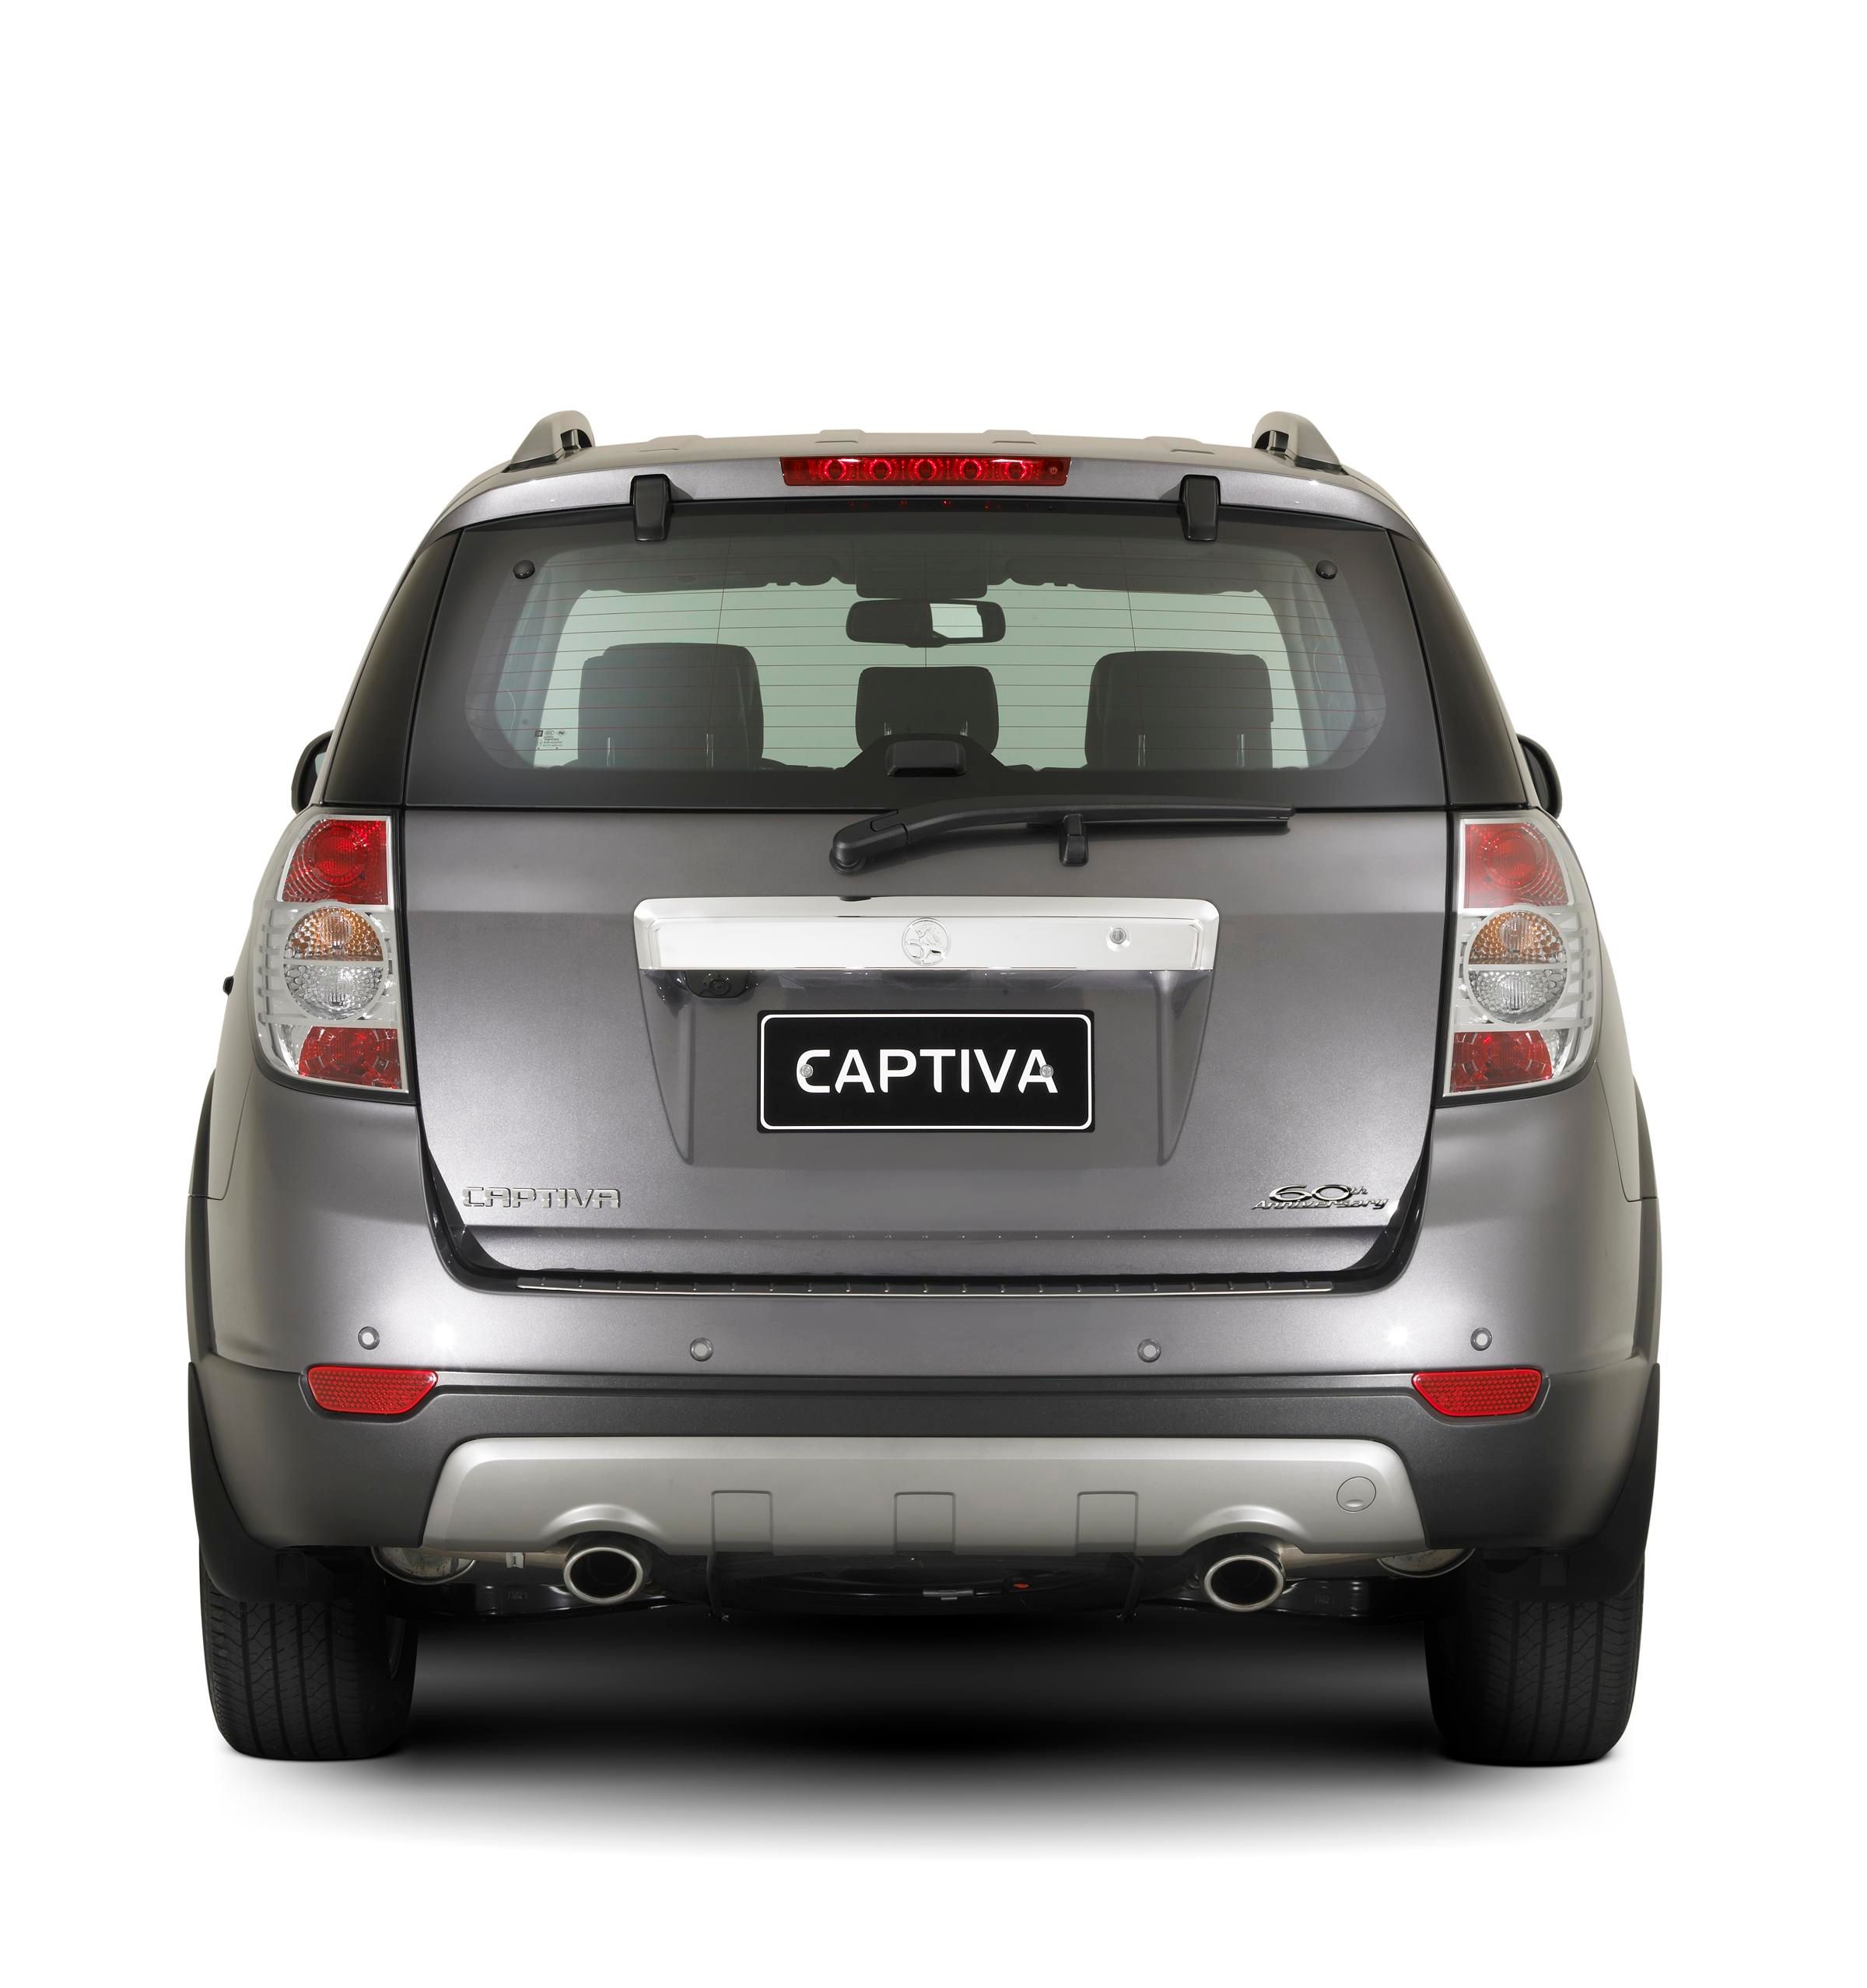 2008 Holden Captiva 60th Anniversary Special Edition